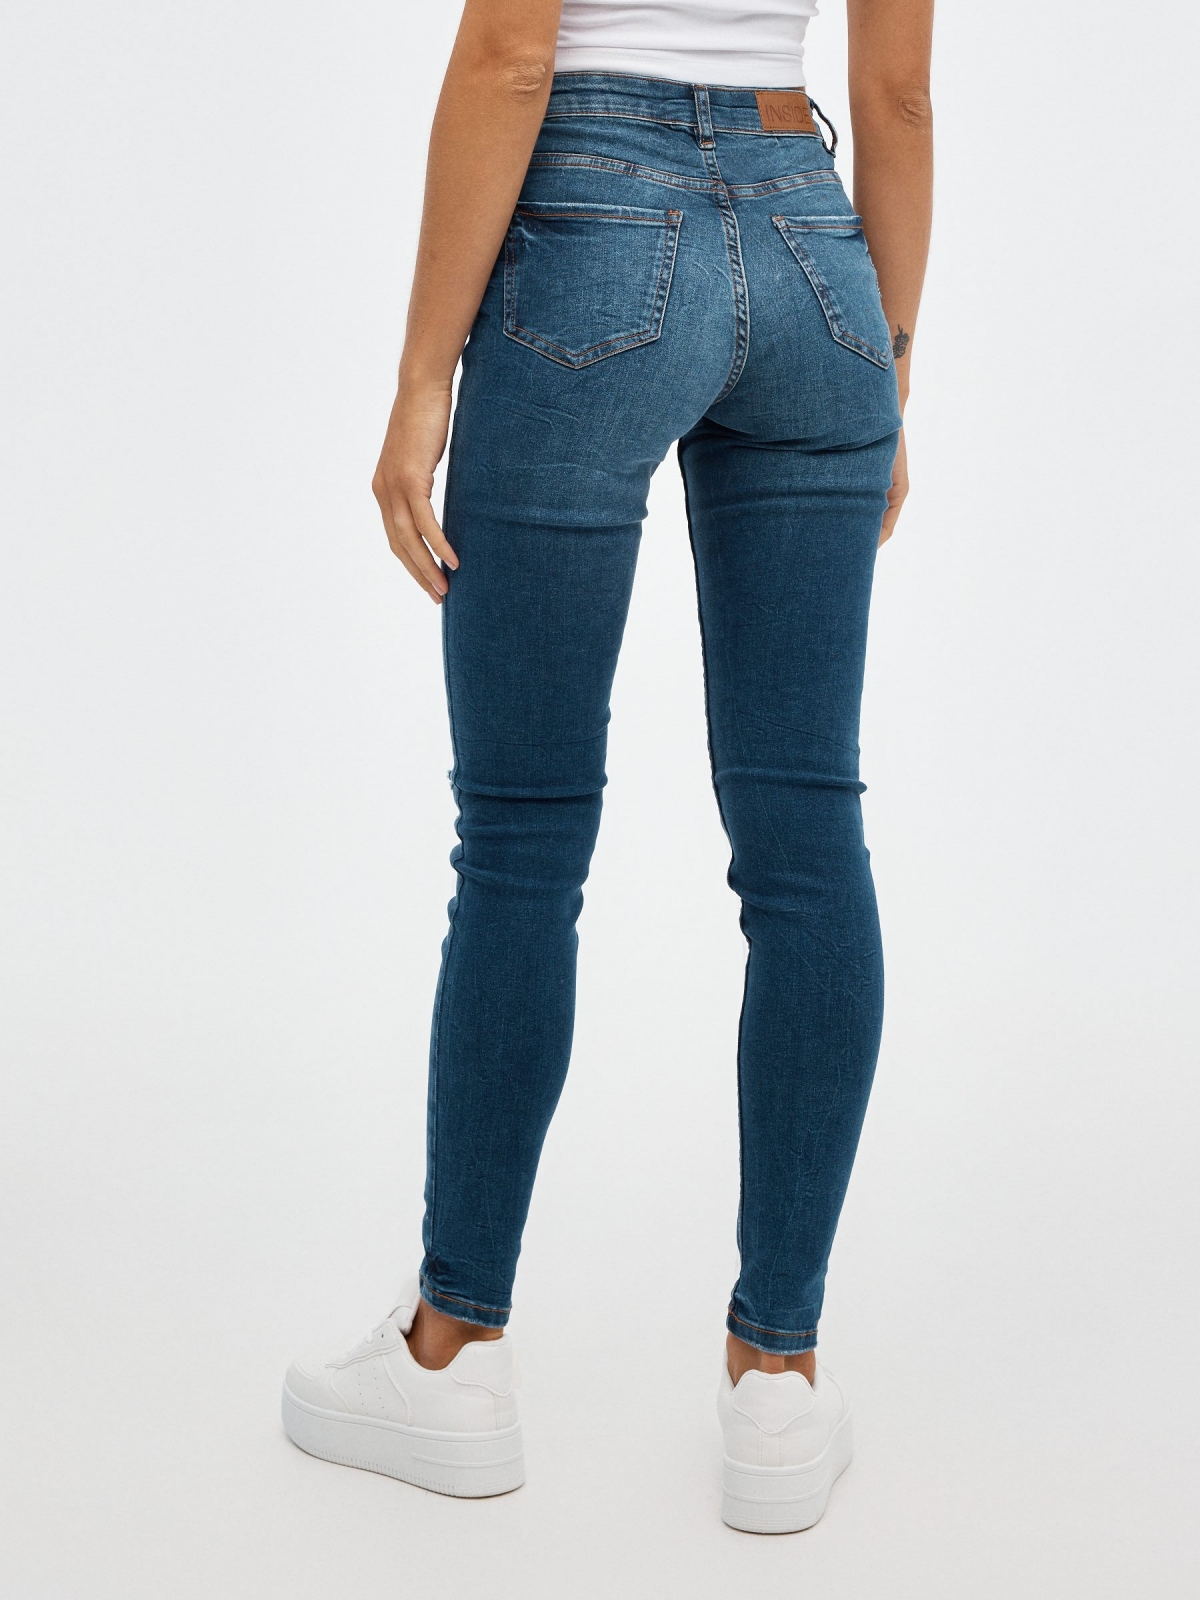 Jeans skinny tiro medio azul vista media trasera